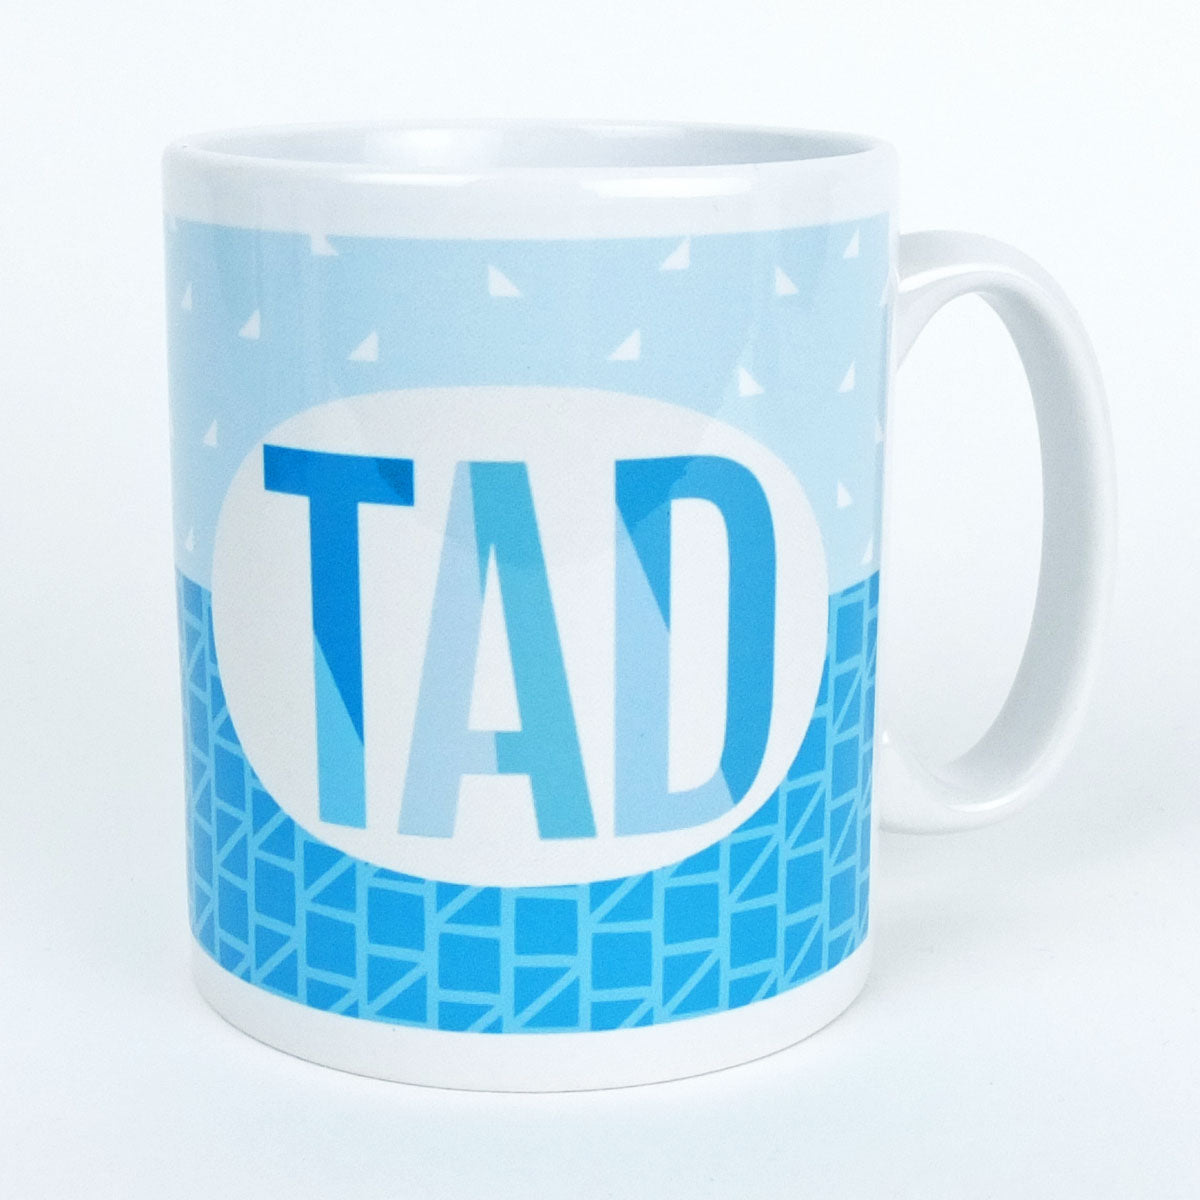 Tad Welsh Mug in Blue